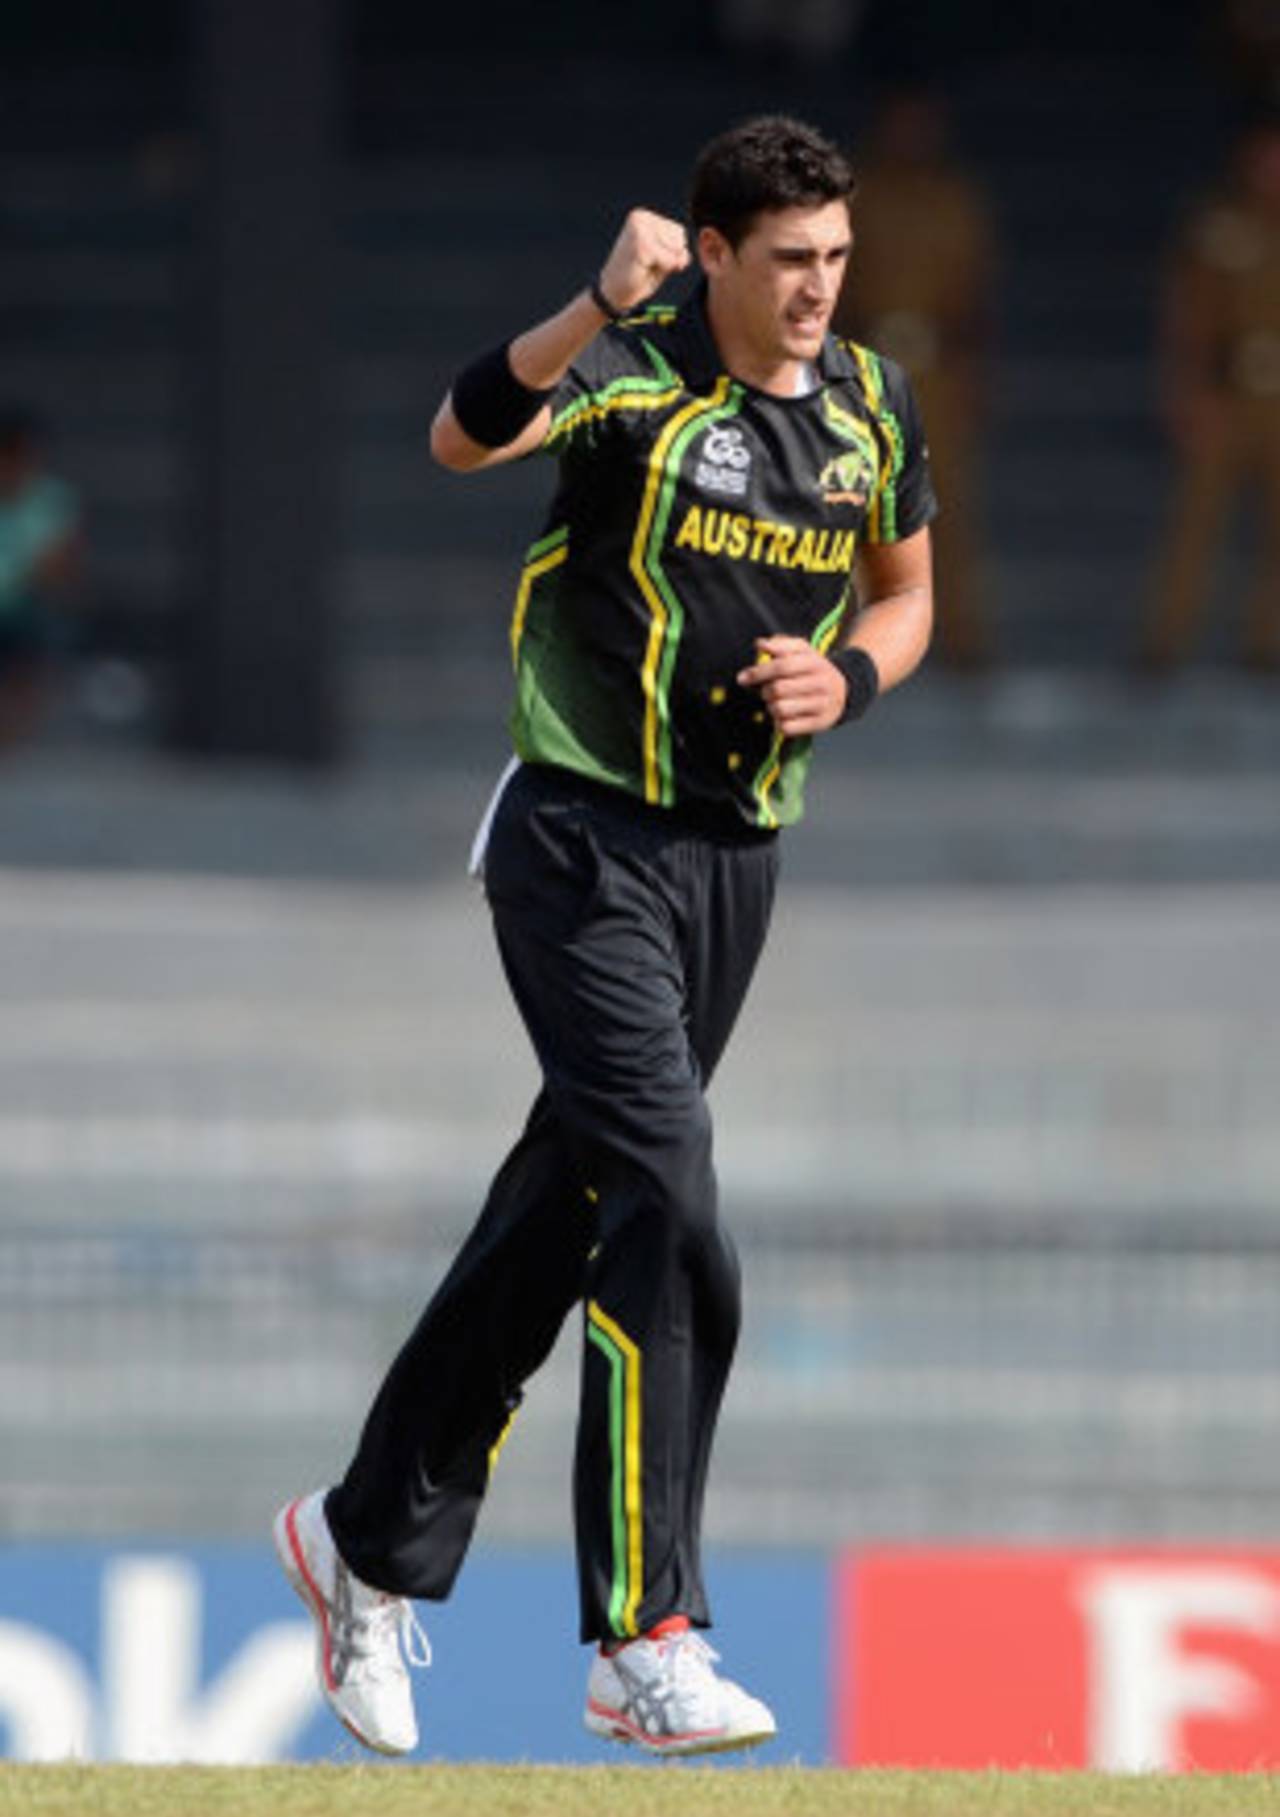 Mitchell Starc was among those getting an early wicket, Australia v Ireland, World Twenty20 2012, Group B, Colombo, September 19, 2012